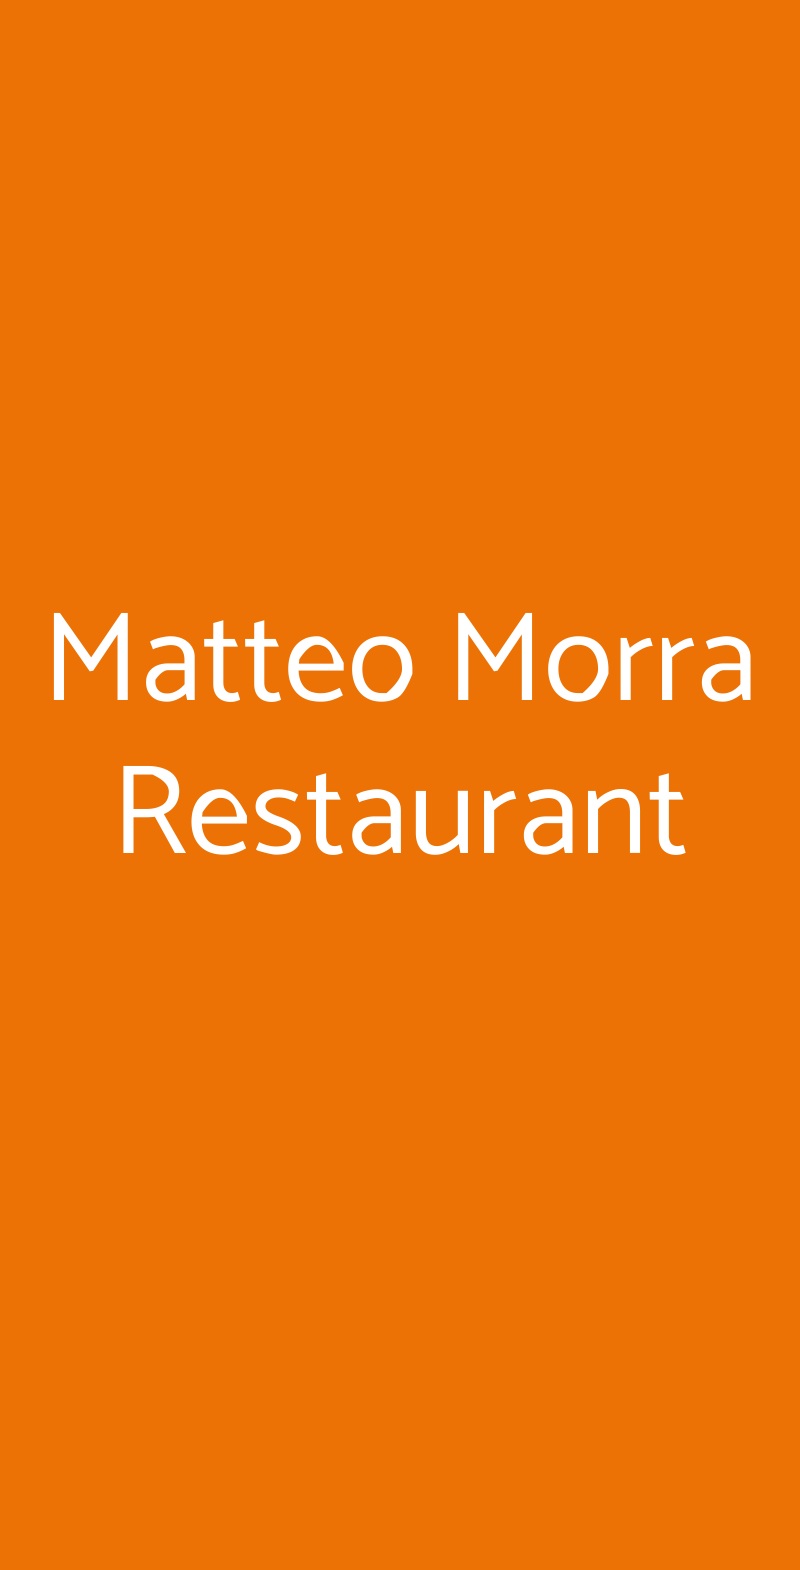 Matteo Morra Restaurant Barolo menù 1 pagina